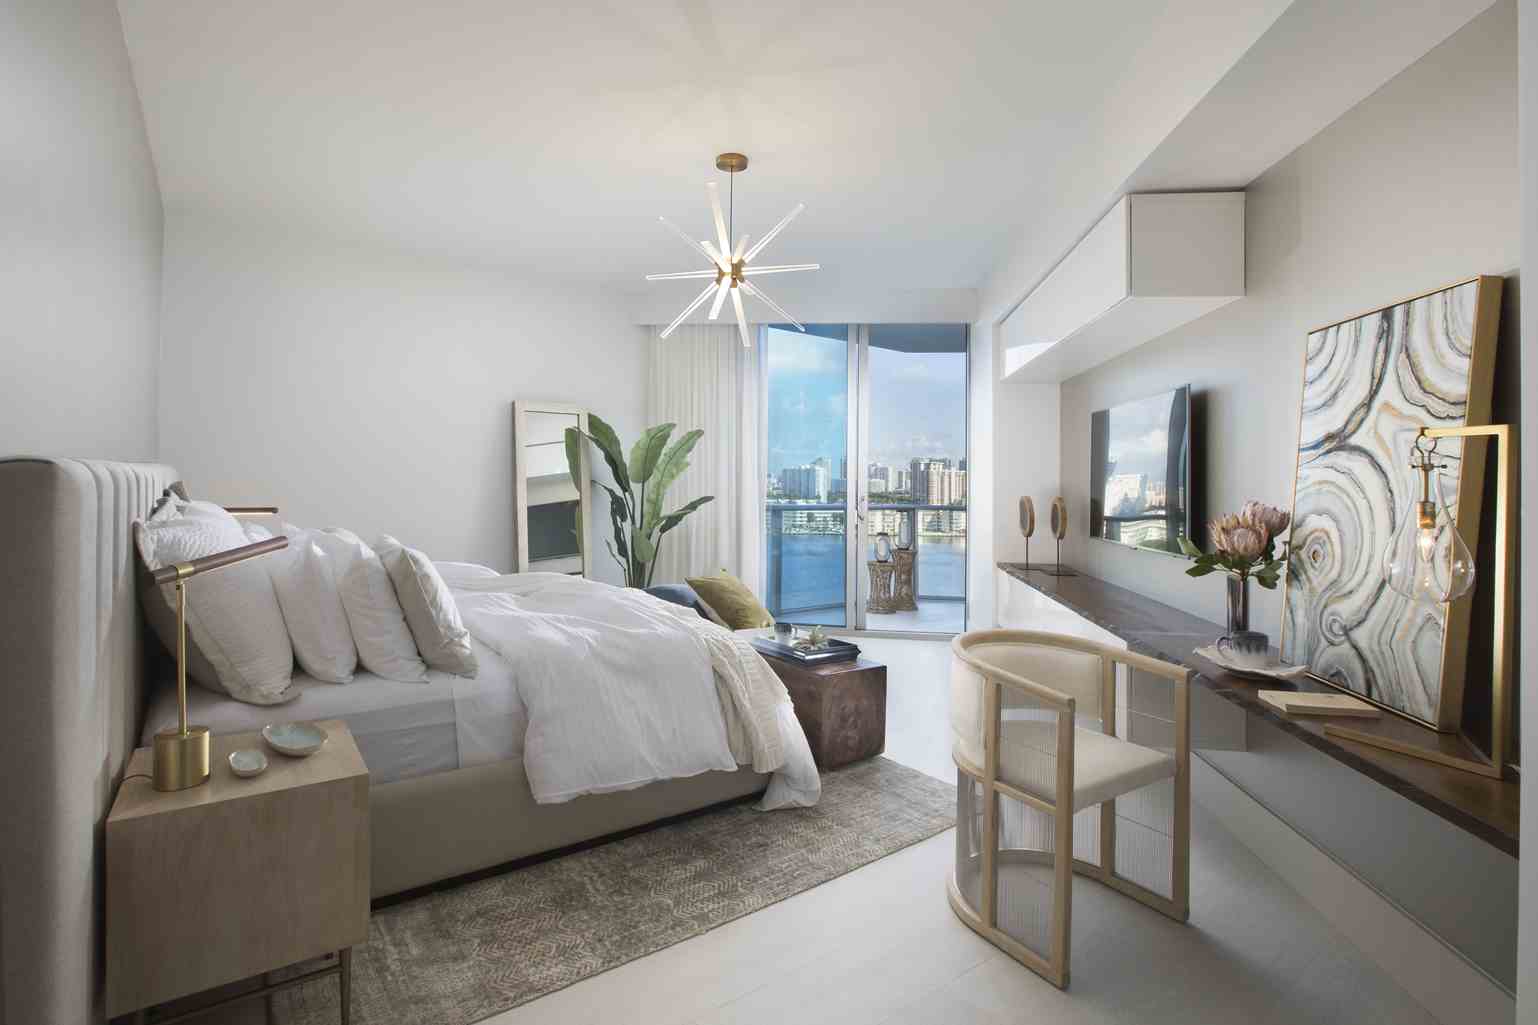 interior condo bedroom master miami modern interiors coastal designers inspire dkor residential load dkorinteriors portfolio